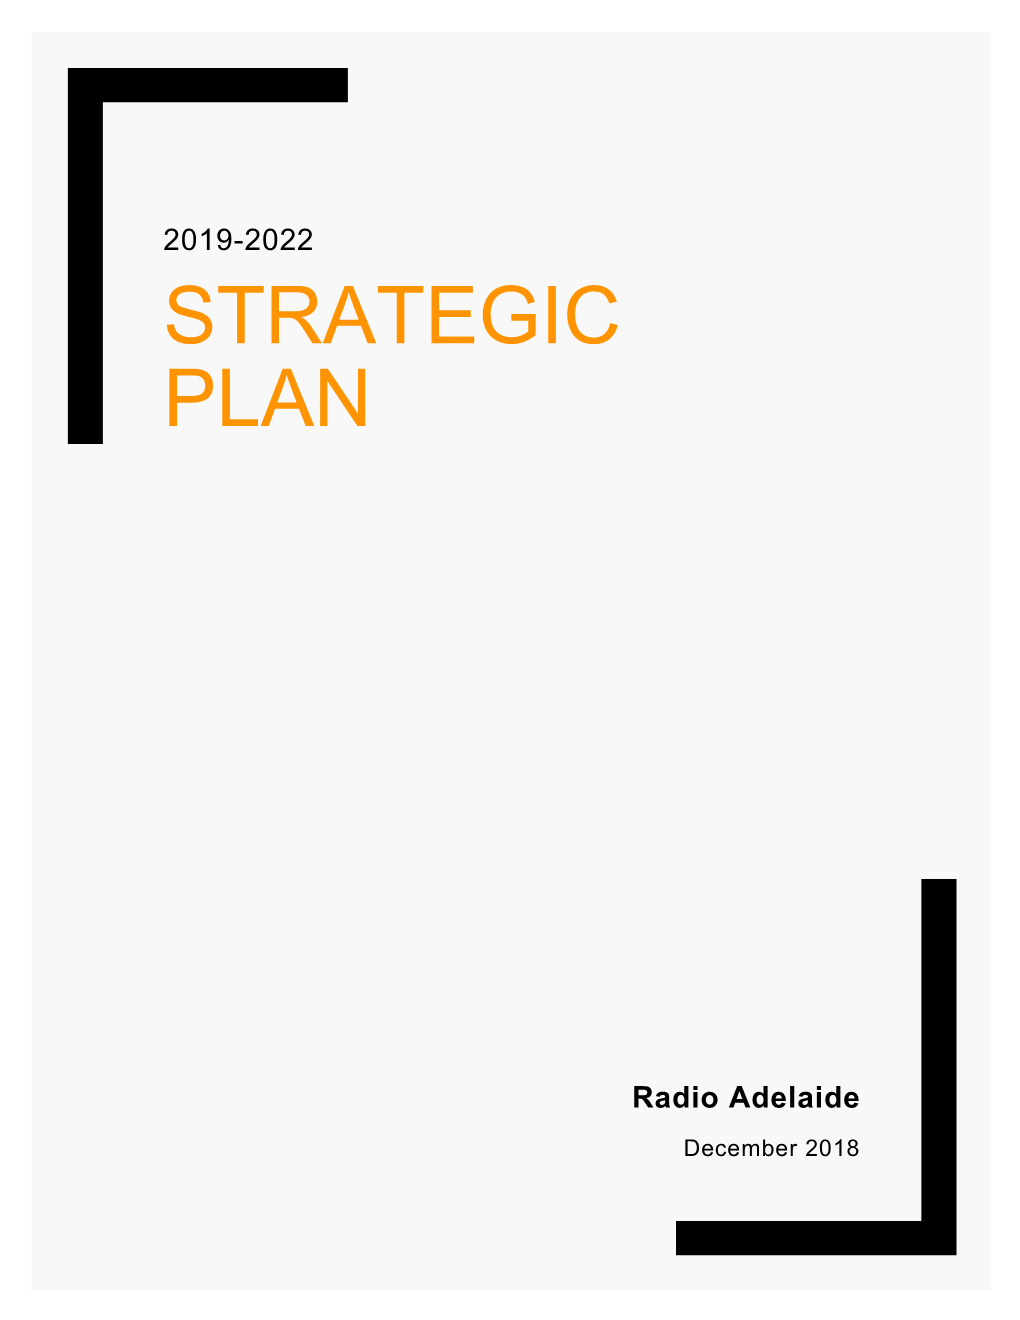 Radio Adelaide Strategic Plan